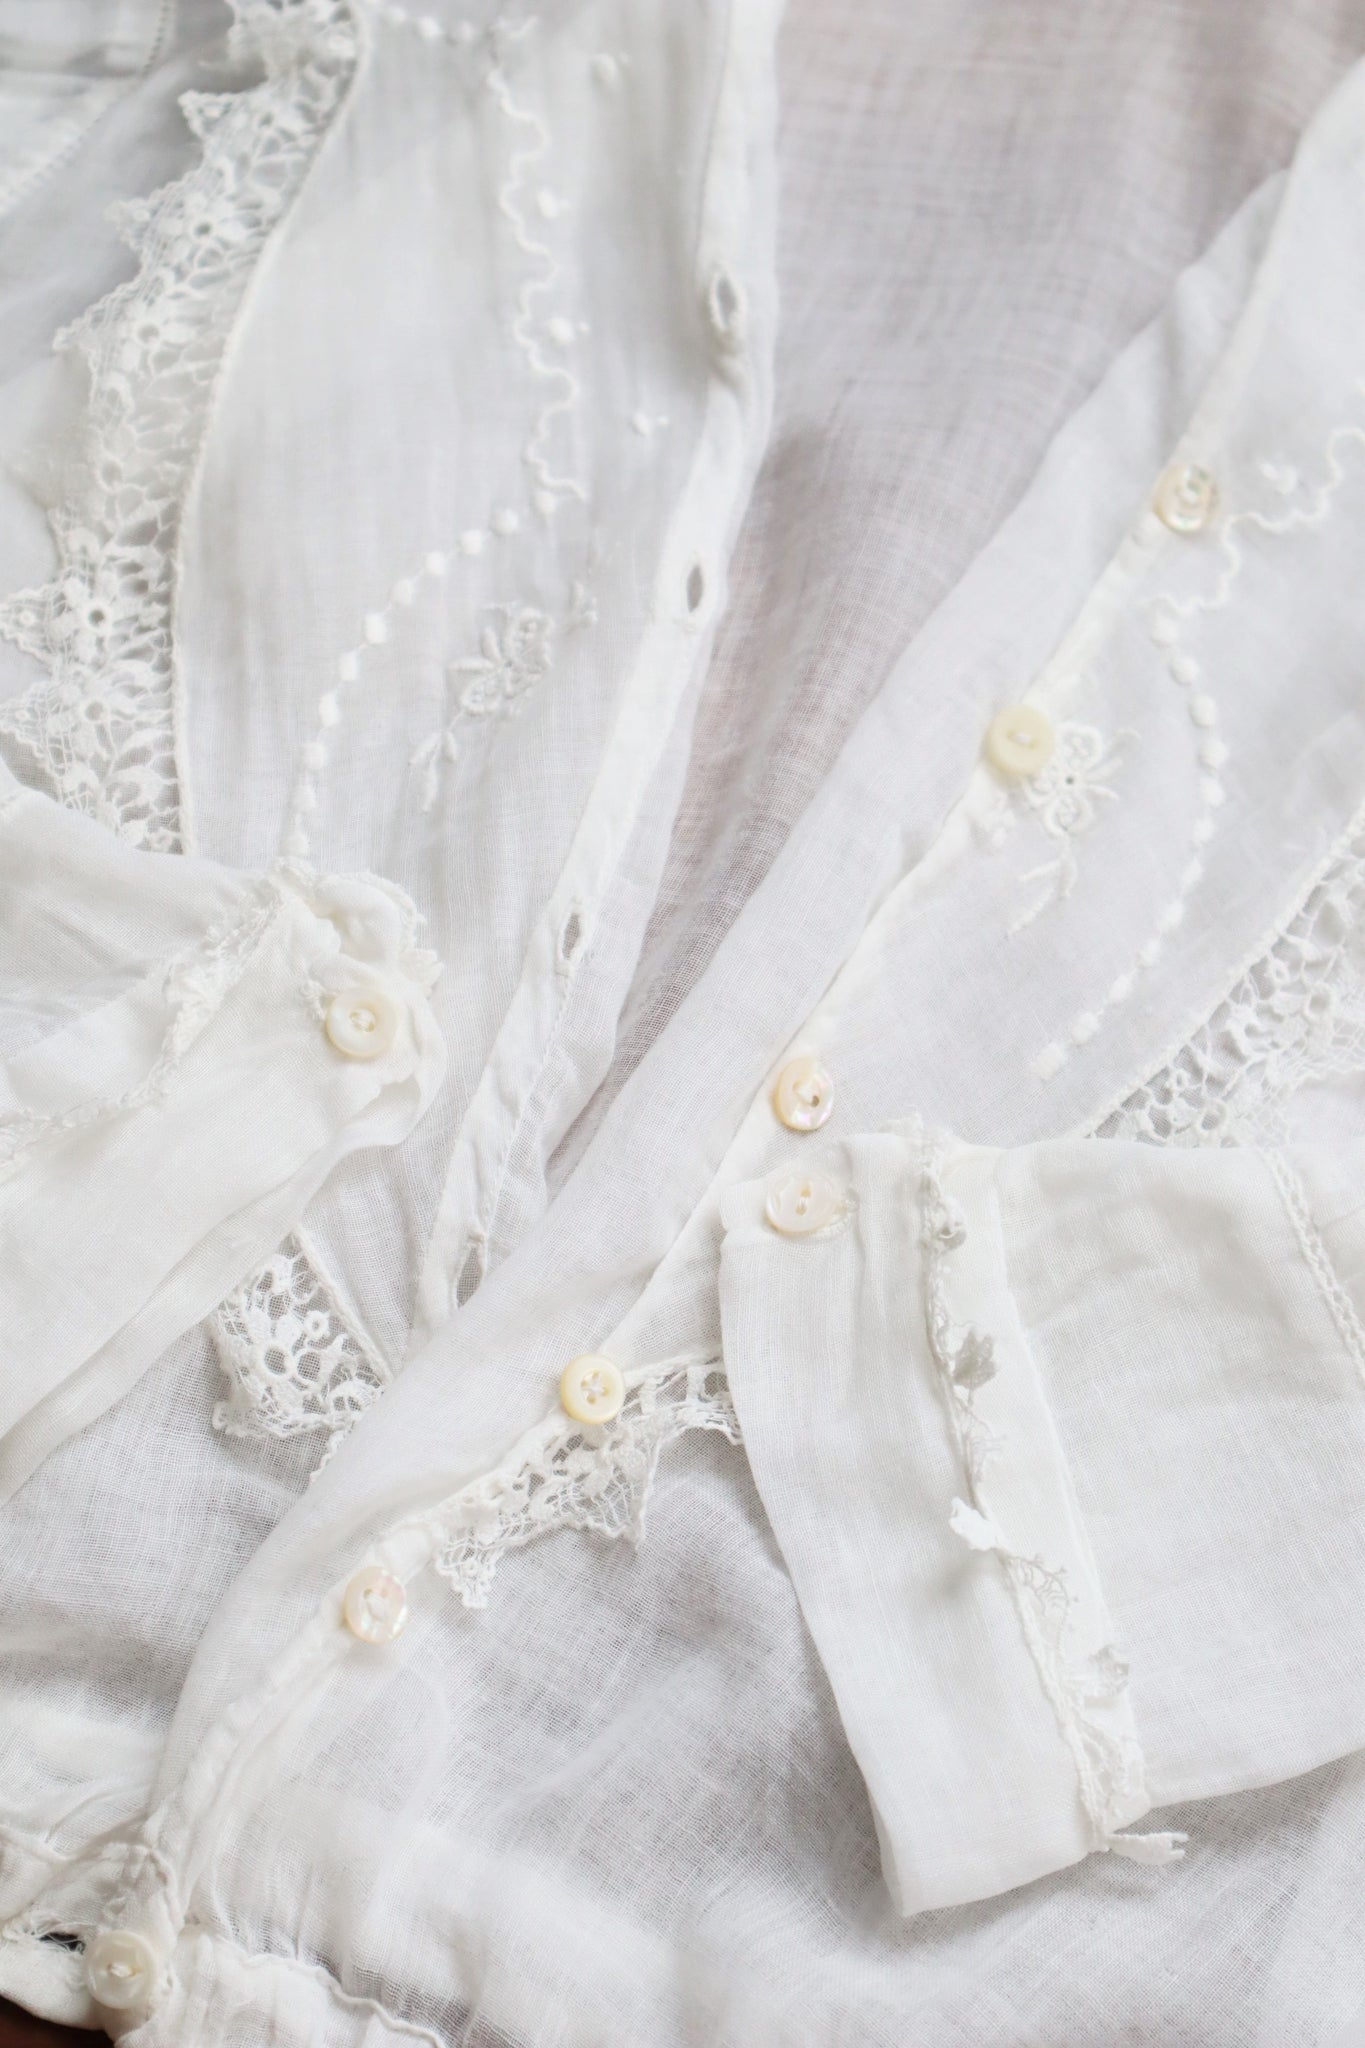 1910s White Floral Lace Muslin Cotton Blouse